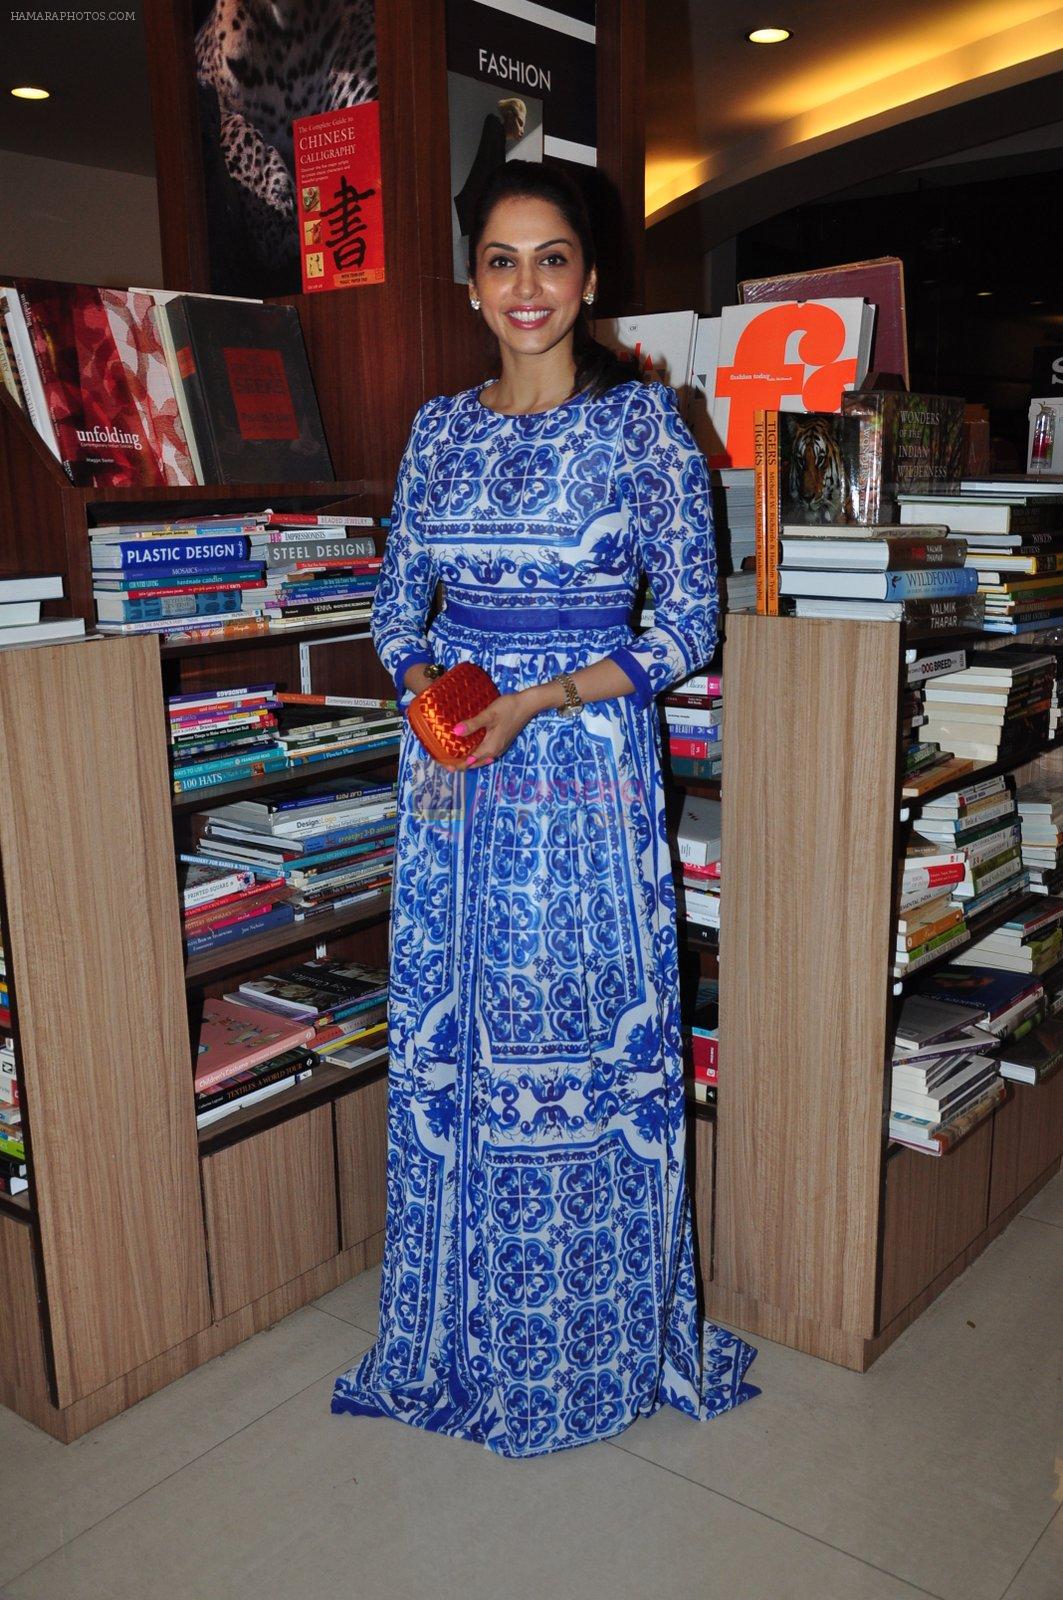 Isha Koppikar at book launch on 8th Feb 2016